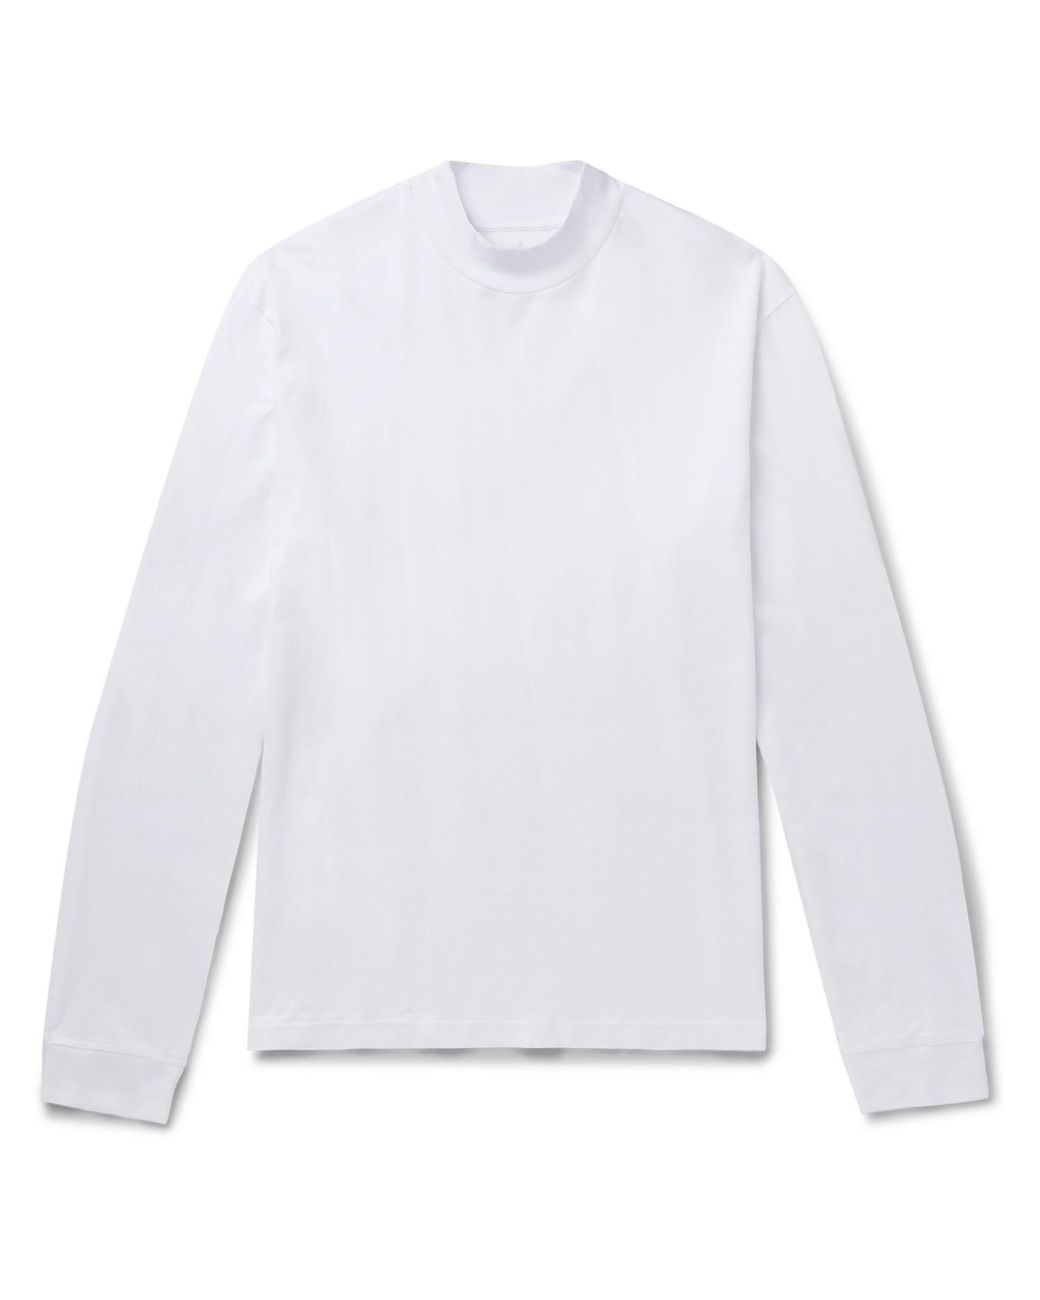 Acne Studios Cotton-jersey Mock-neck T-shirt in White for Men - Lyst